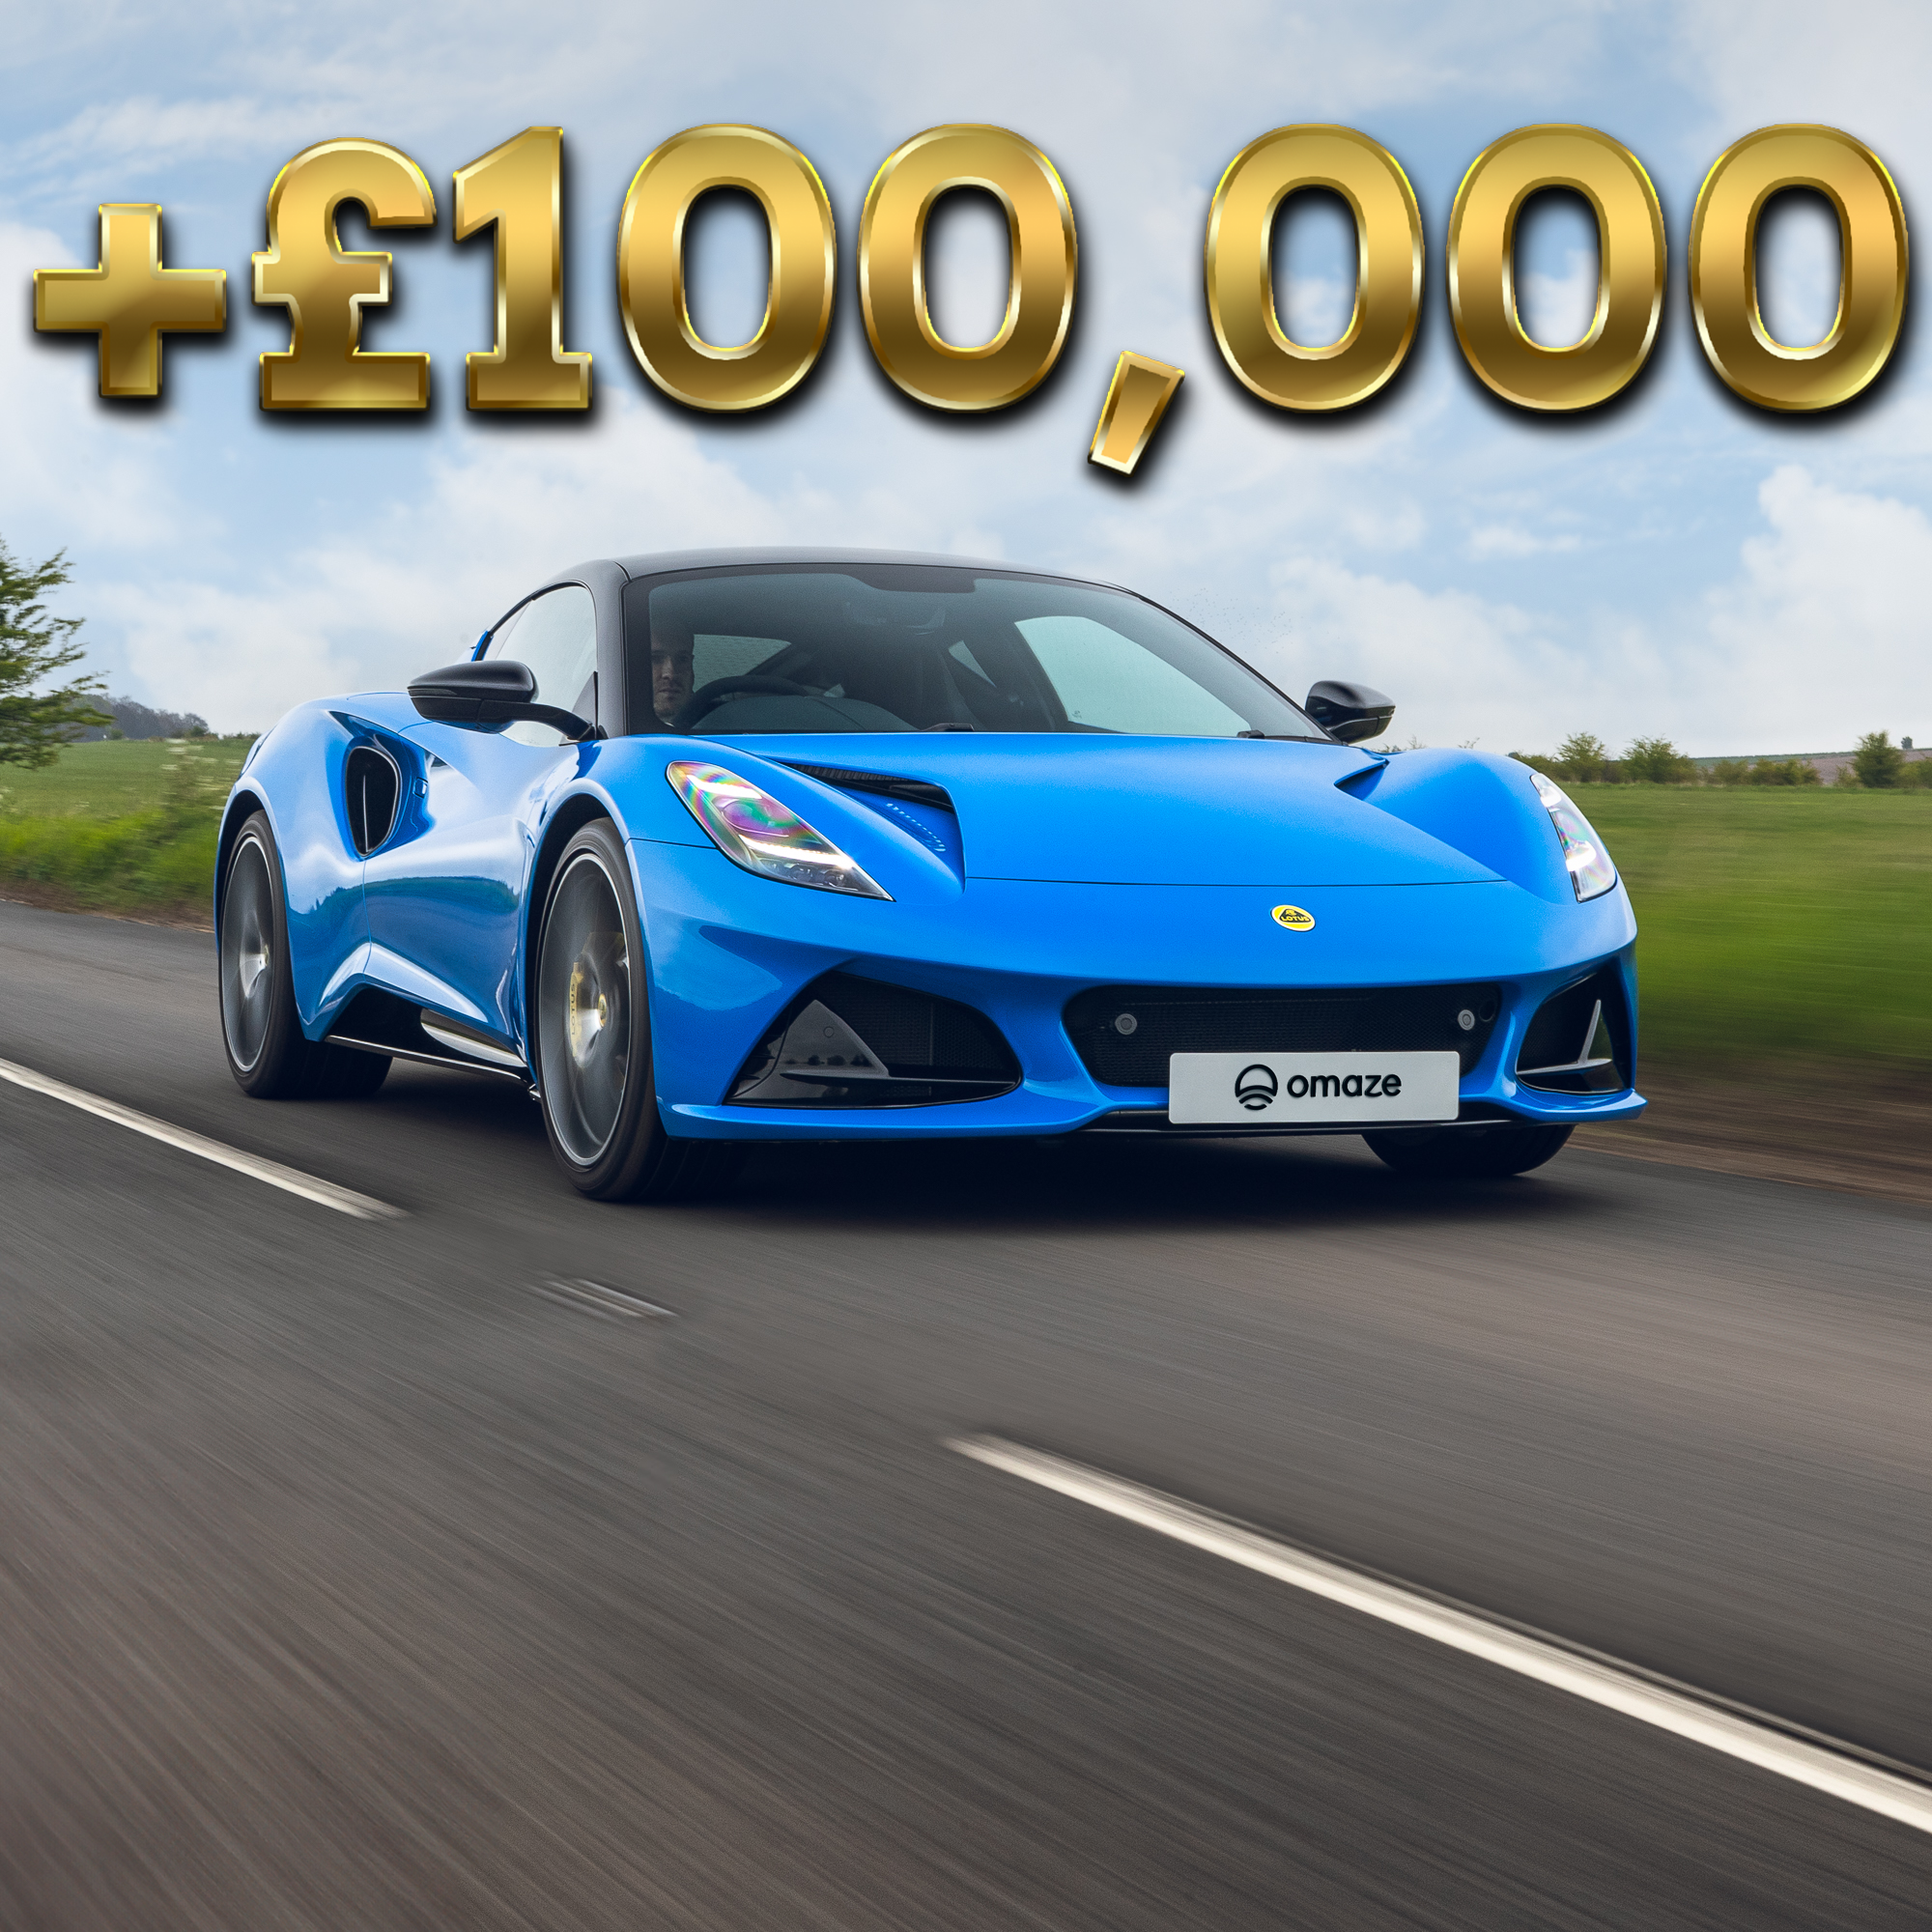 Lotus Emira V6 + £100k | SurreyEarly Bird Prize - Enter by Sunday 16th June